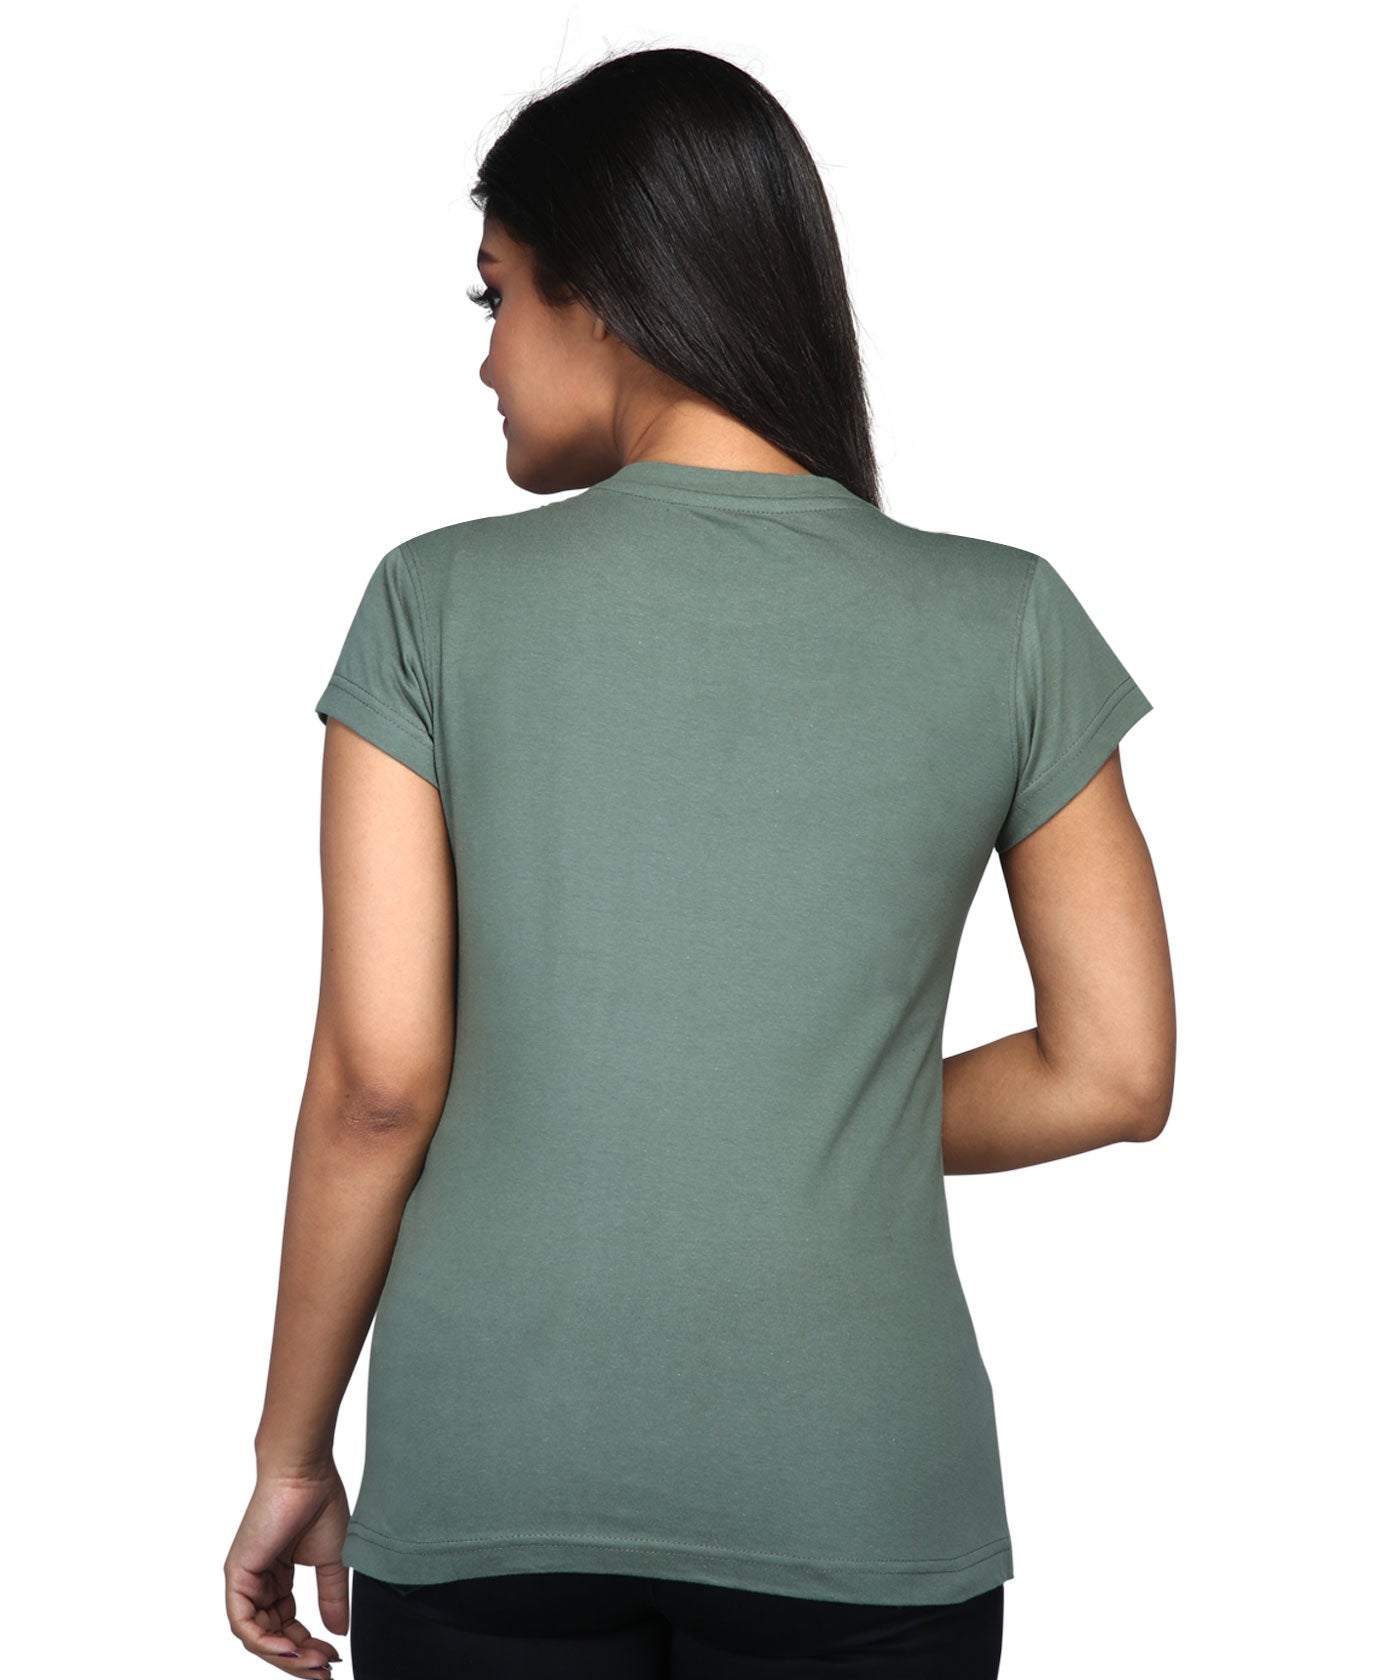 Always Look - Block Print Tees for Women - Military Green